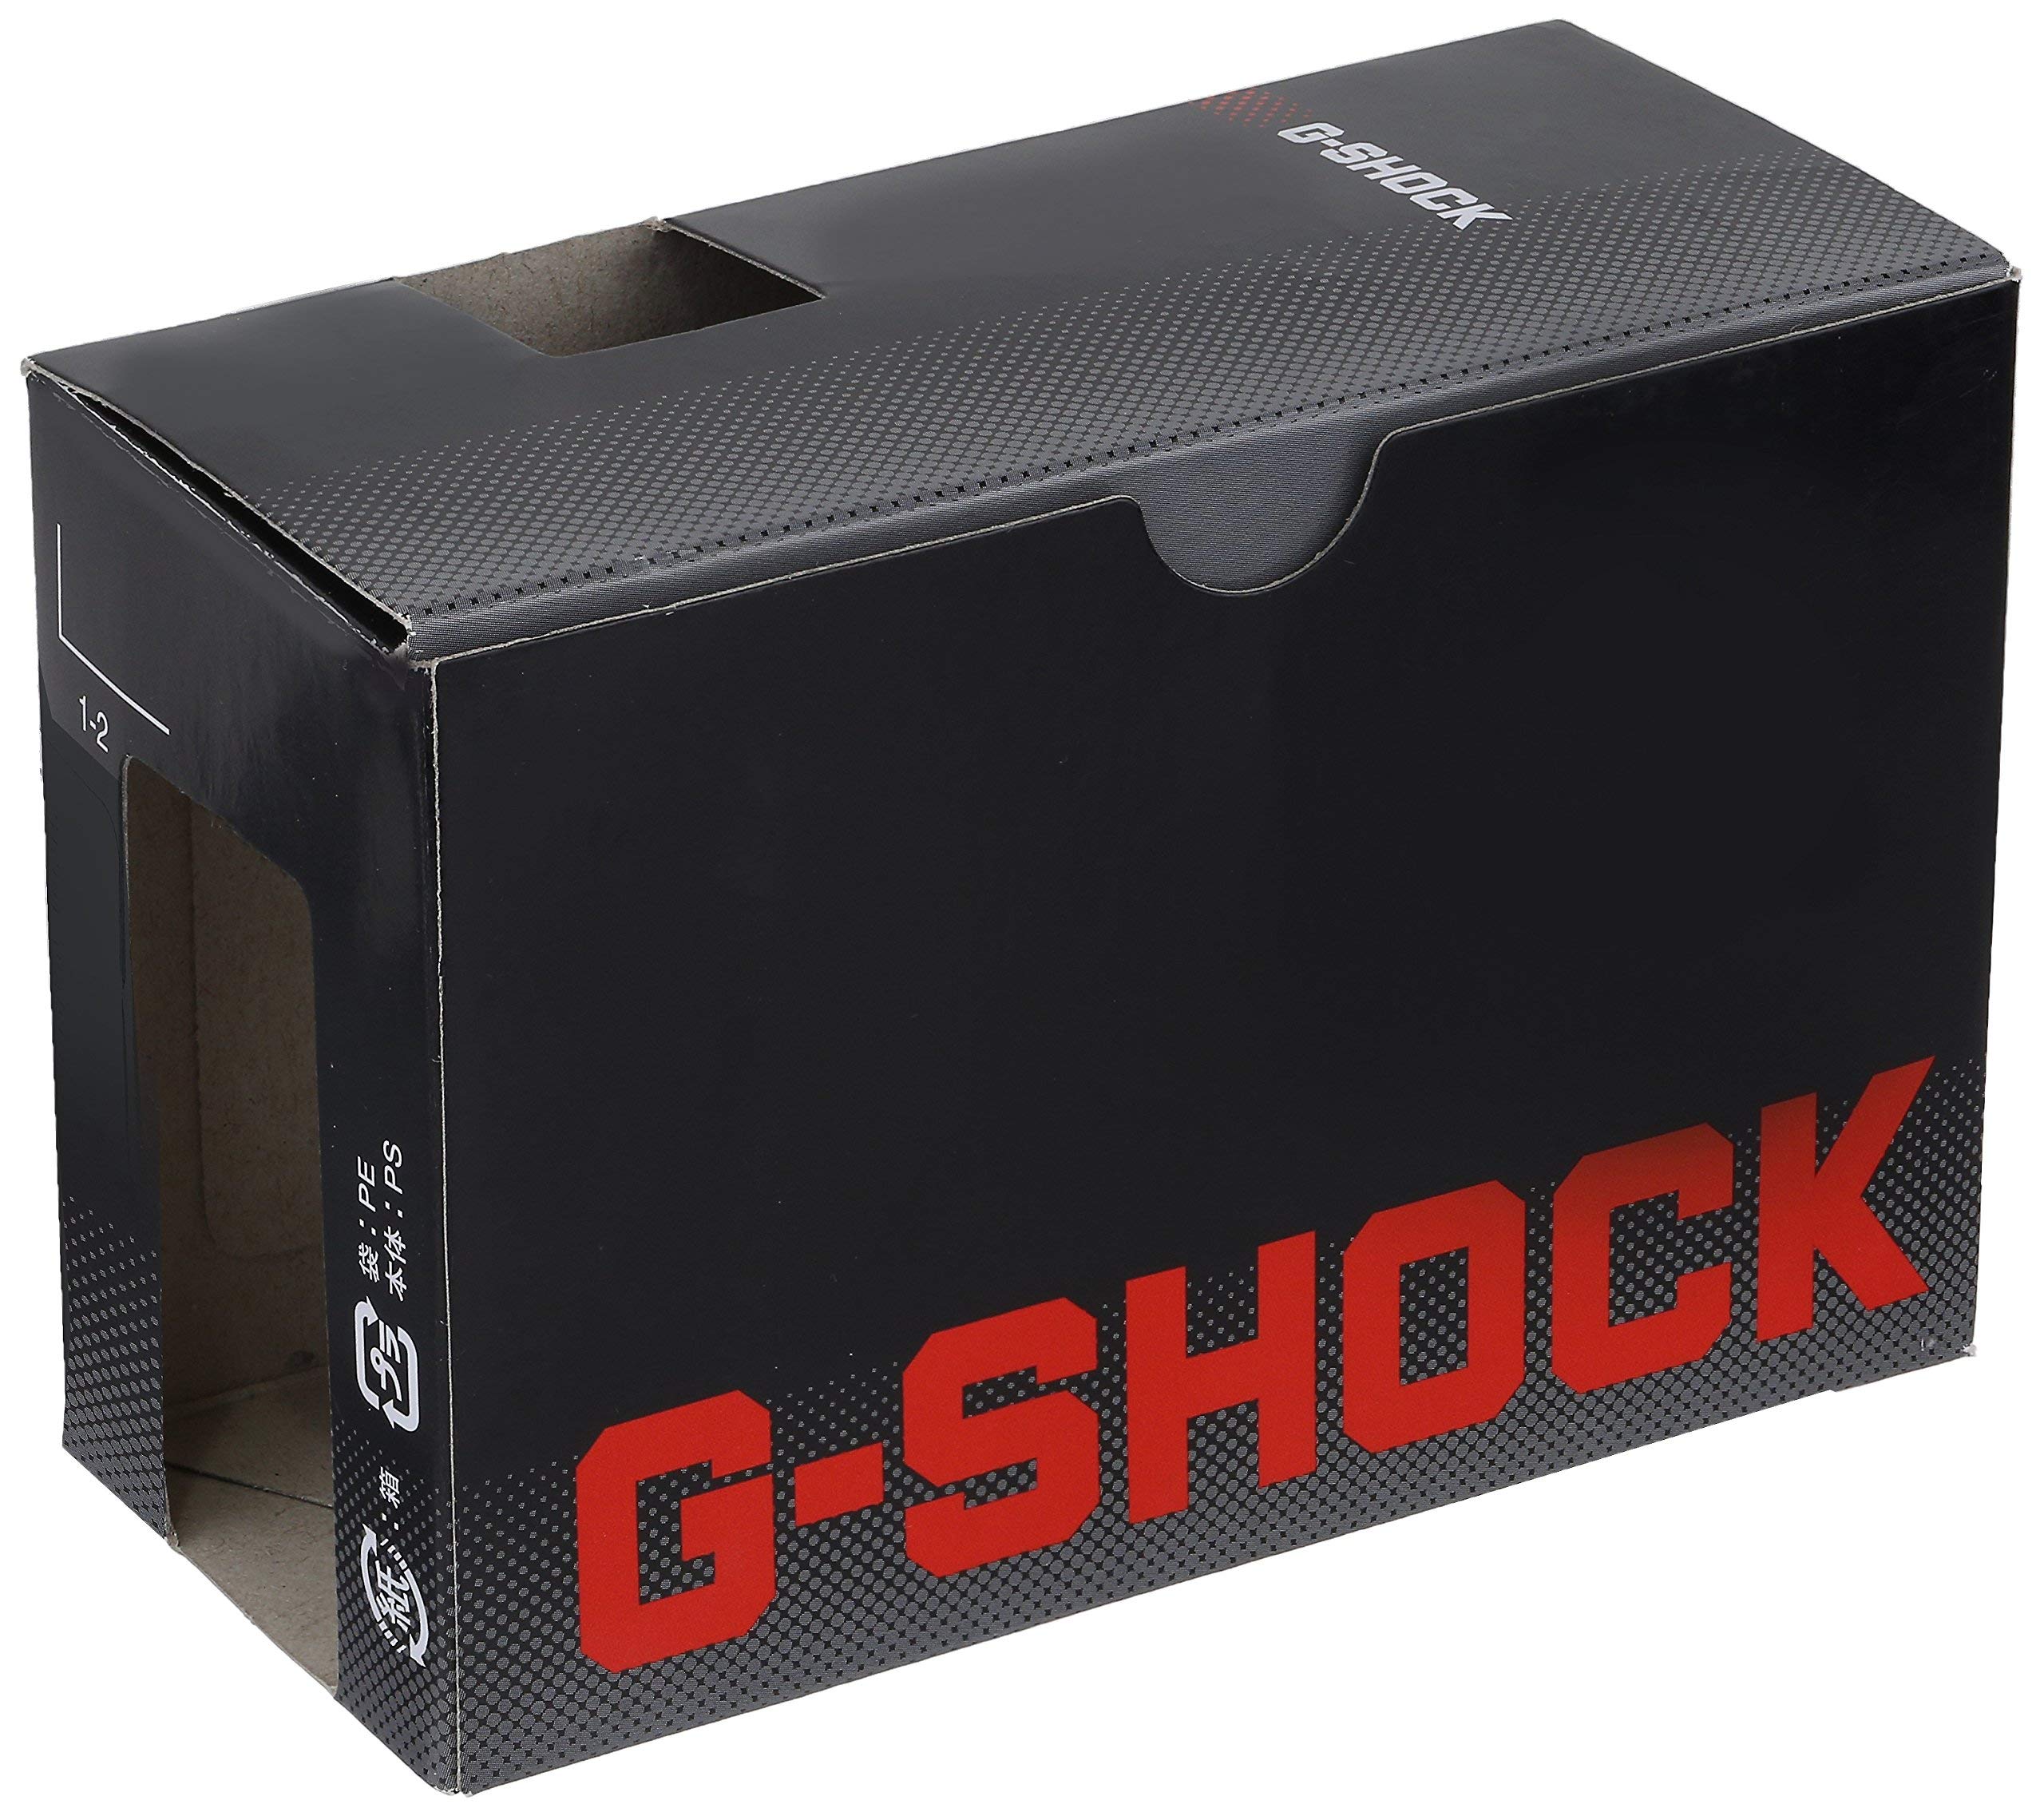 Casio Men's G-Shock GD350-1C Black Resin Sport Watch